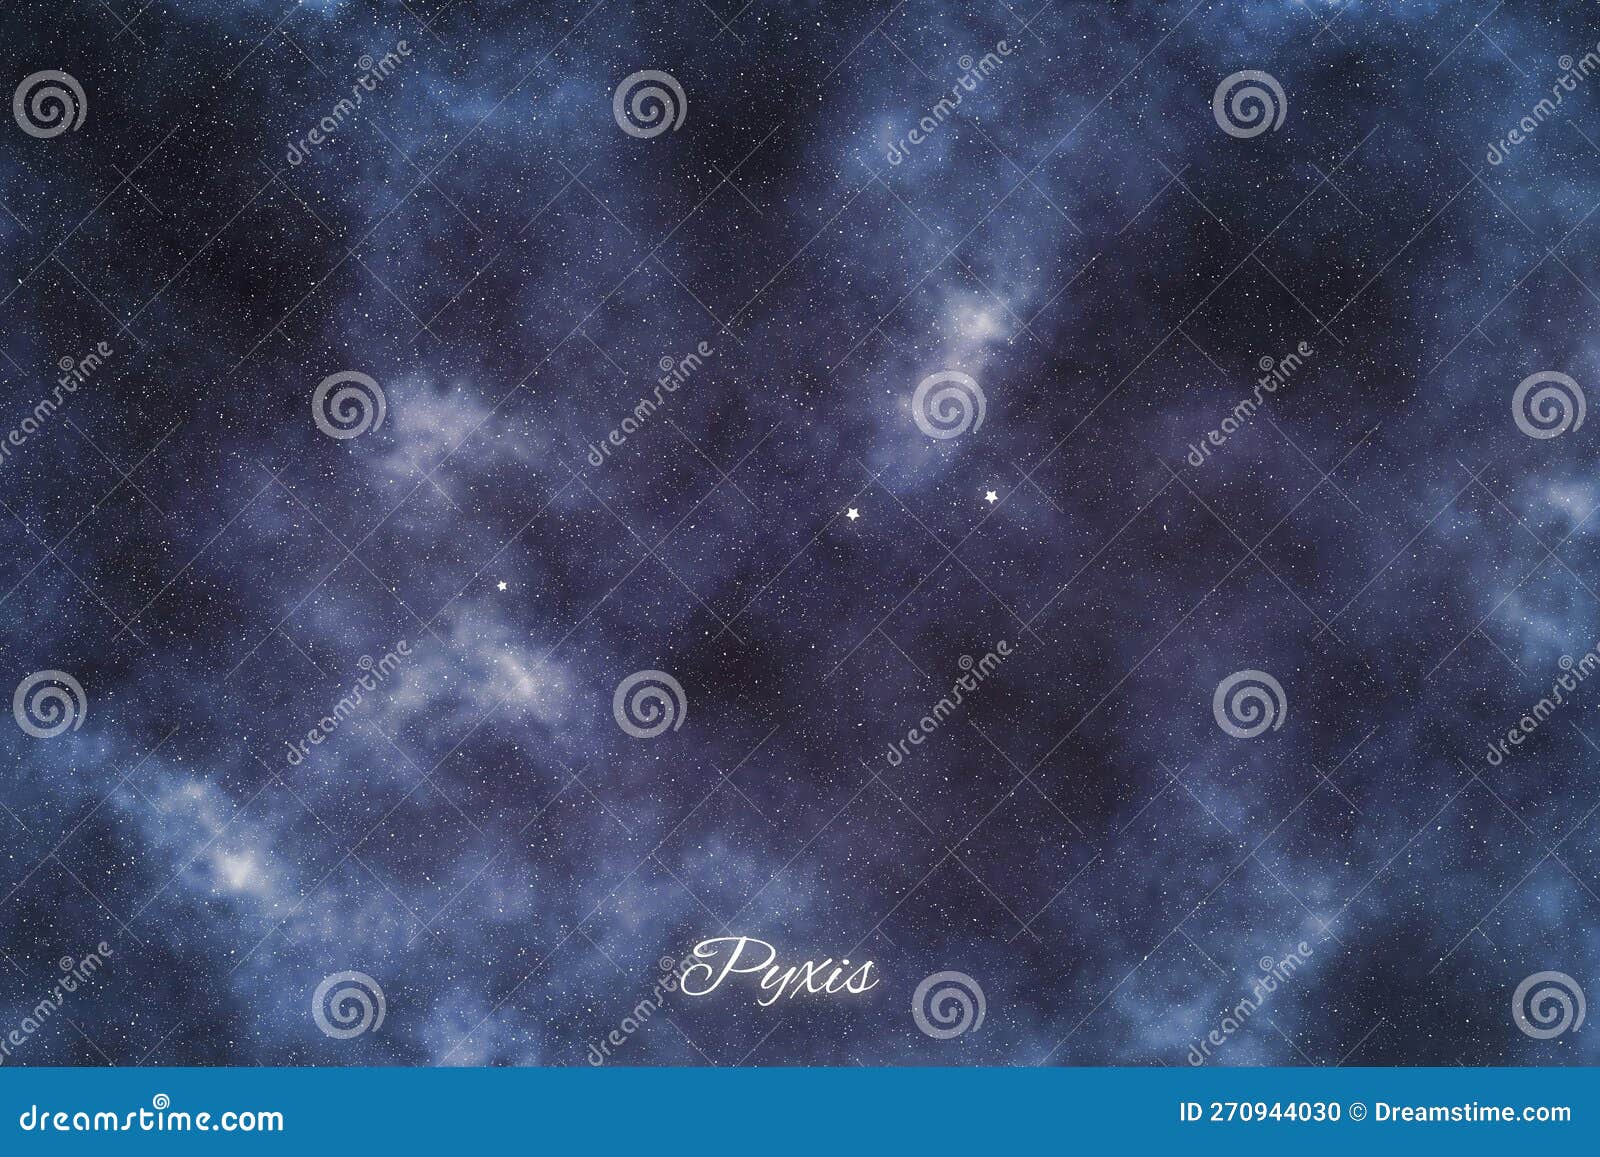 pyxis star constellation, brightest stars , compass constellation, pyxis nautica